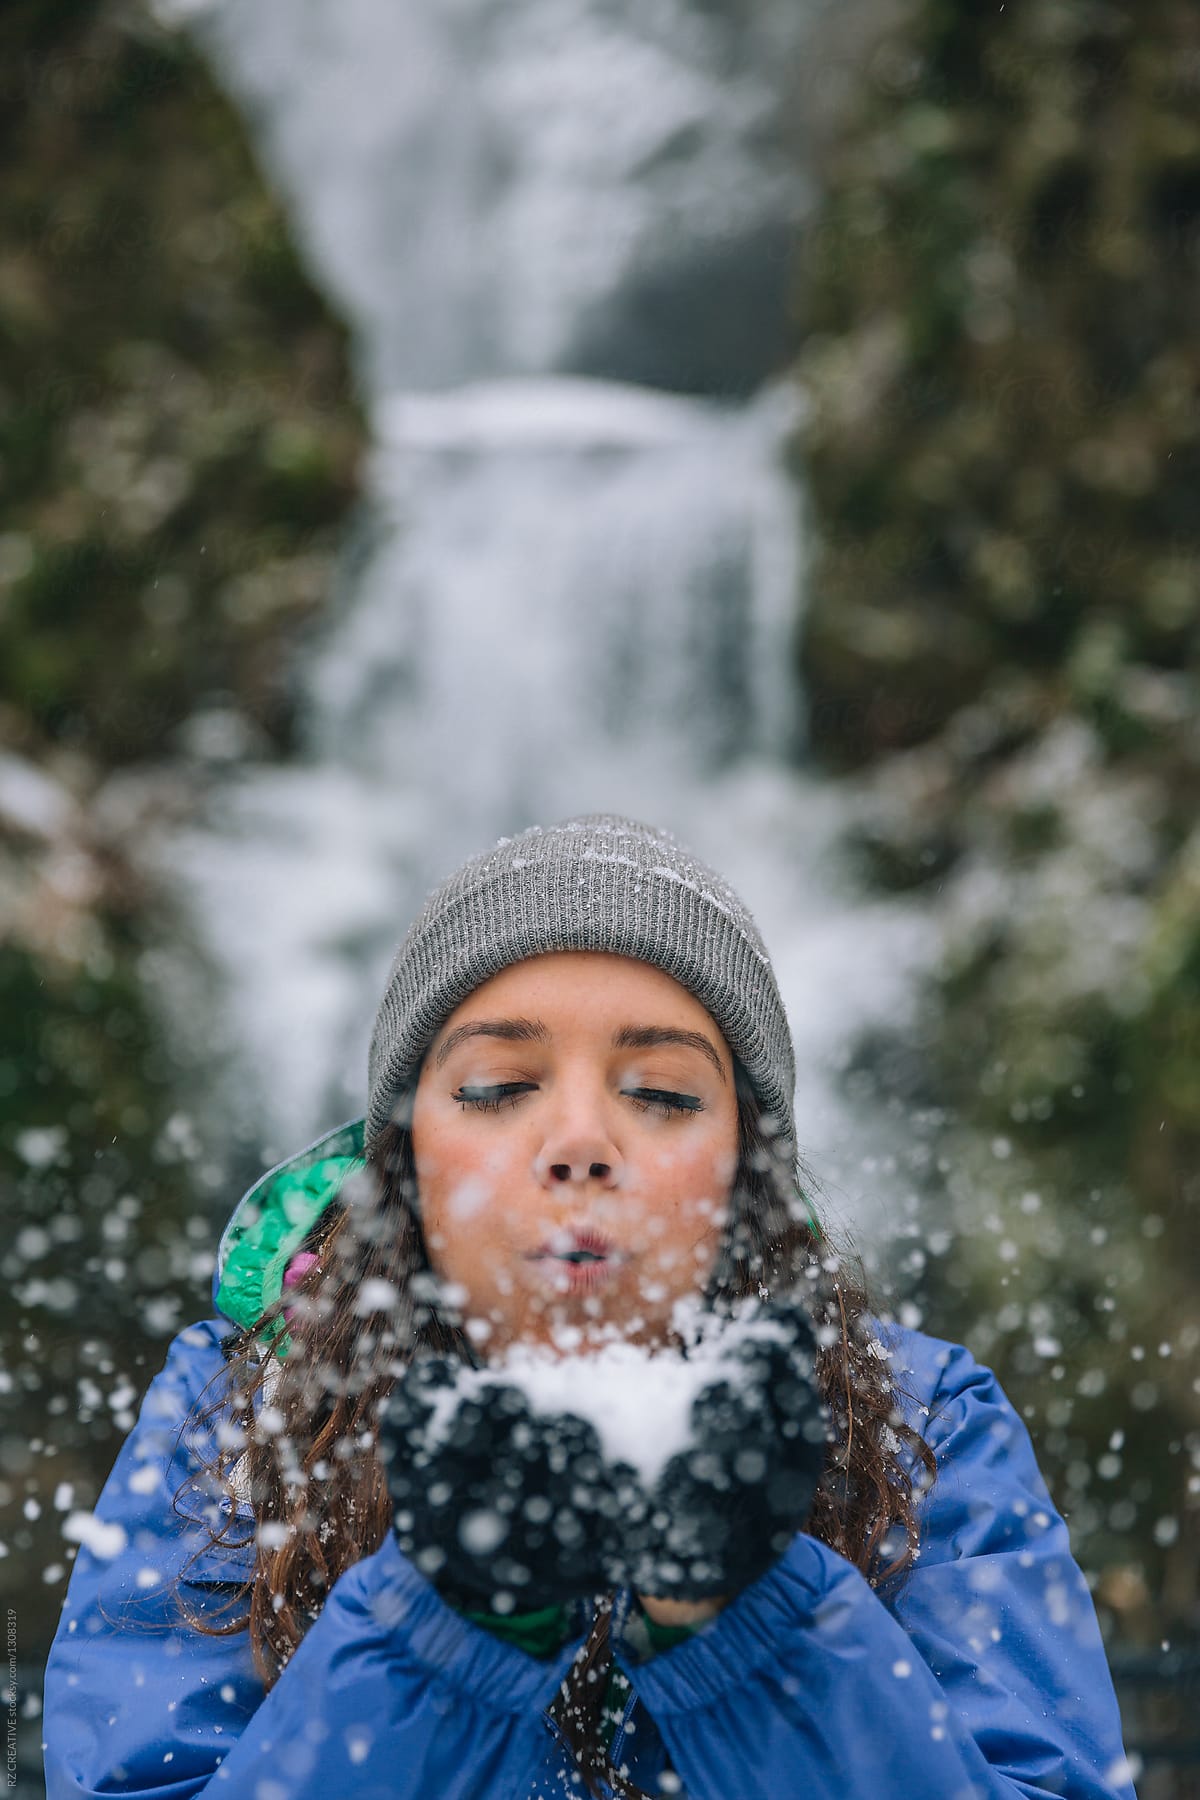 Woman Having Fun In Snow By Stocksy Contributor RZCREATIVE Stocksy